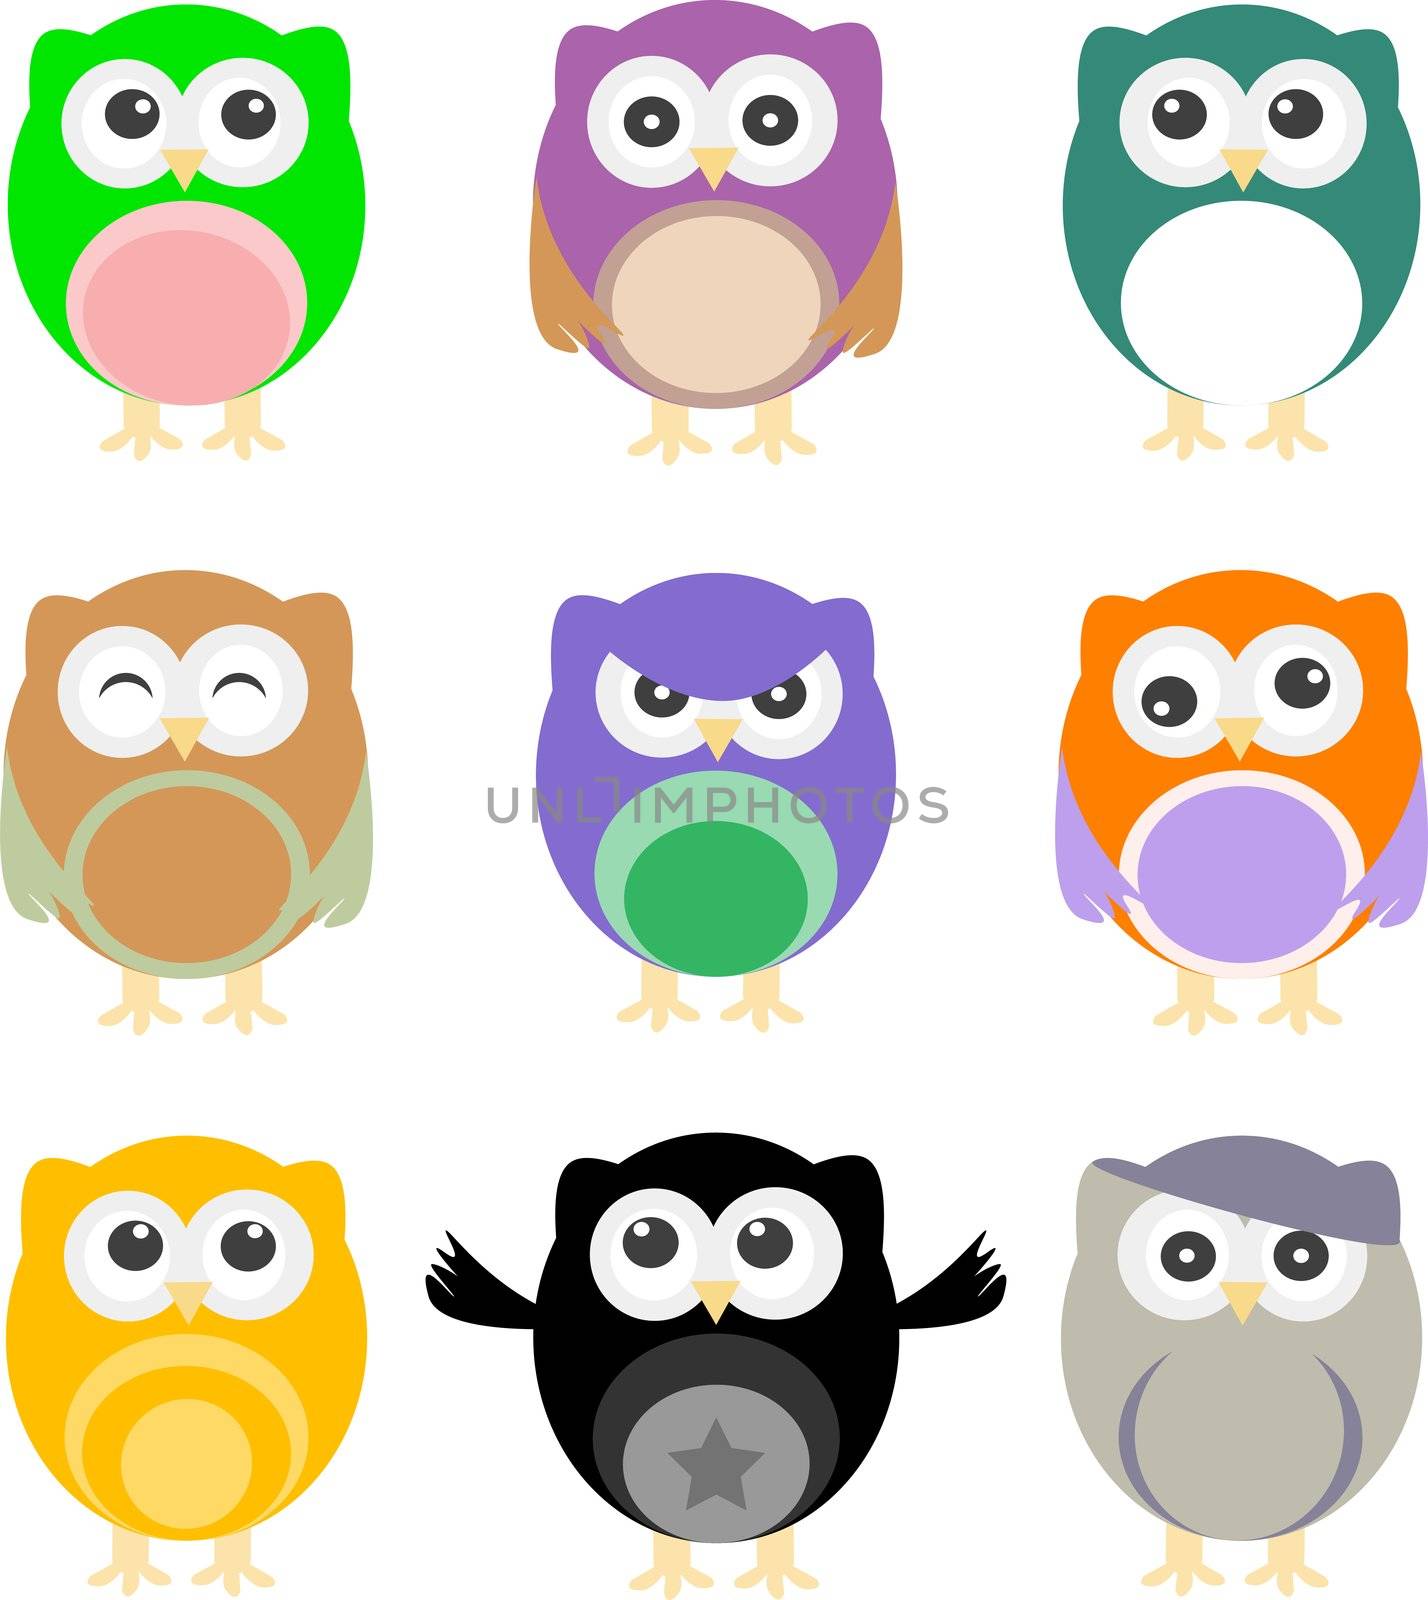 illustration of colorful cartoon owls set